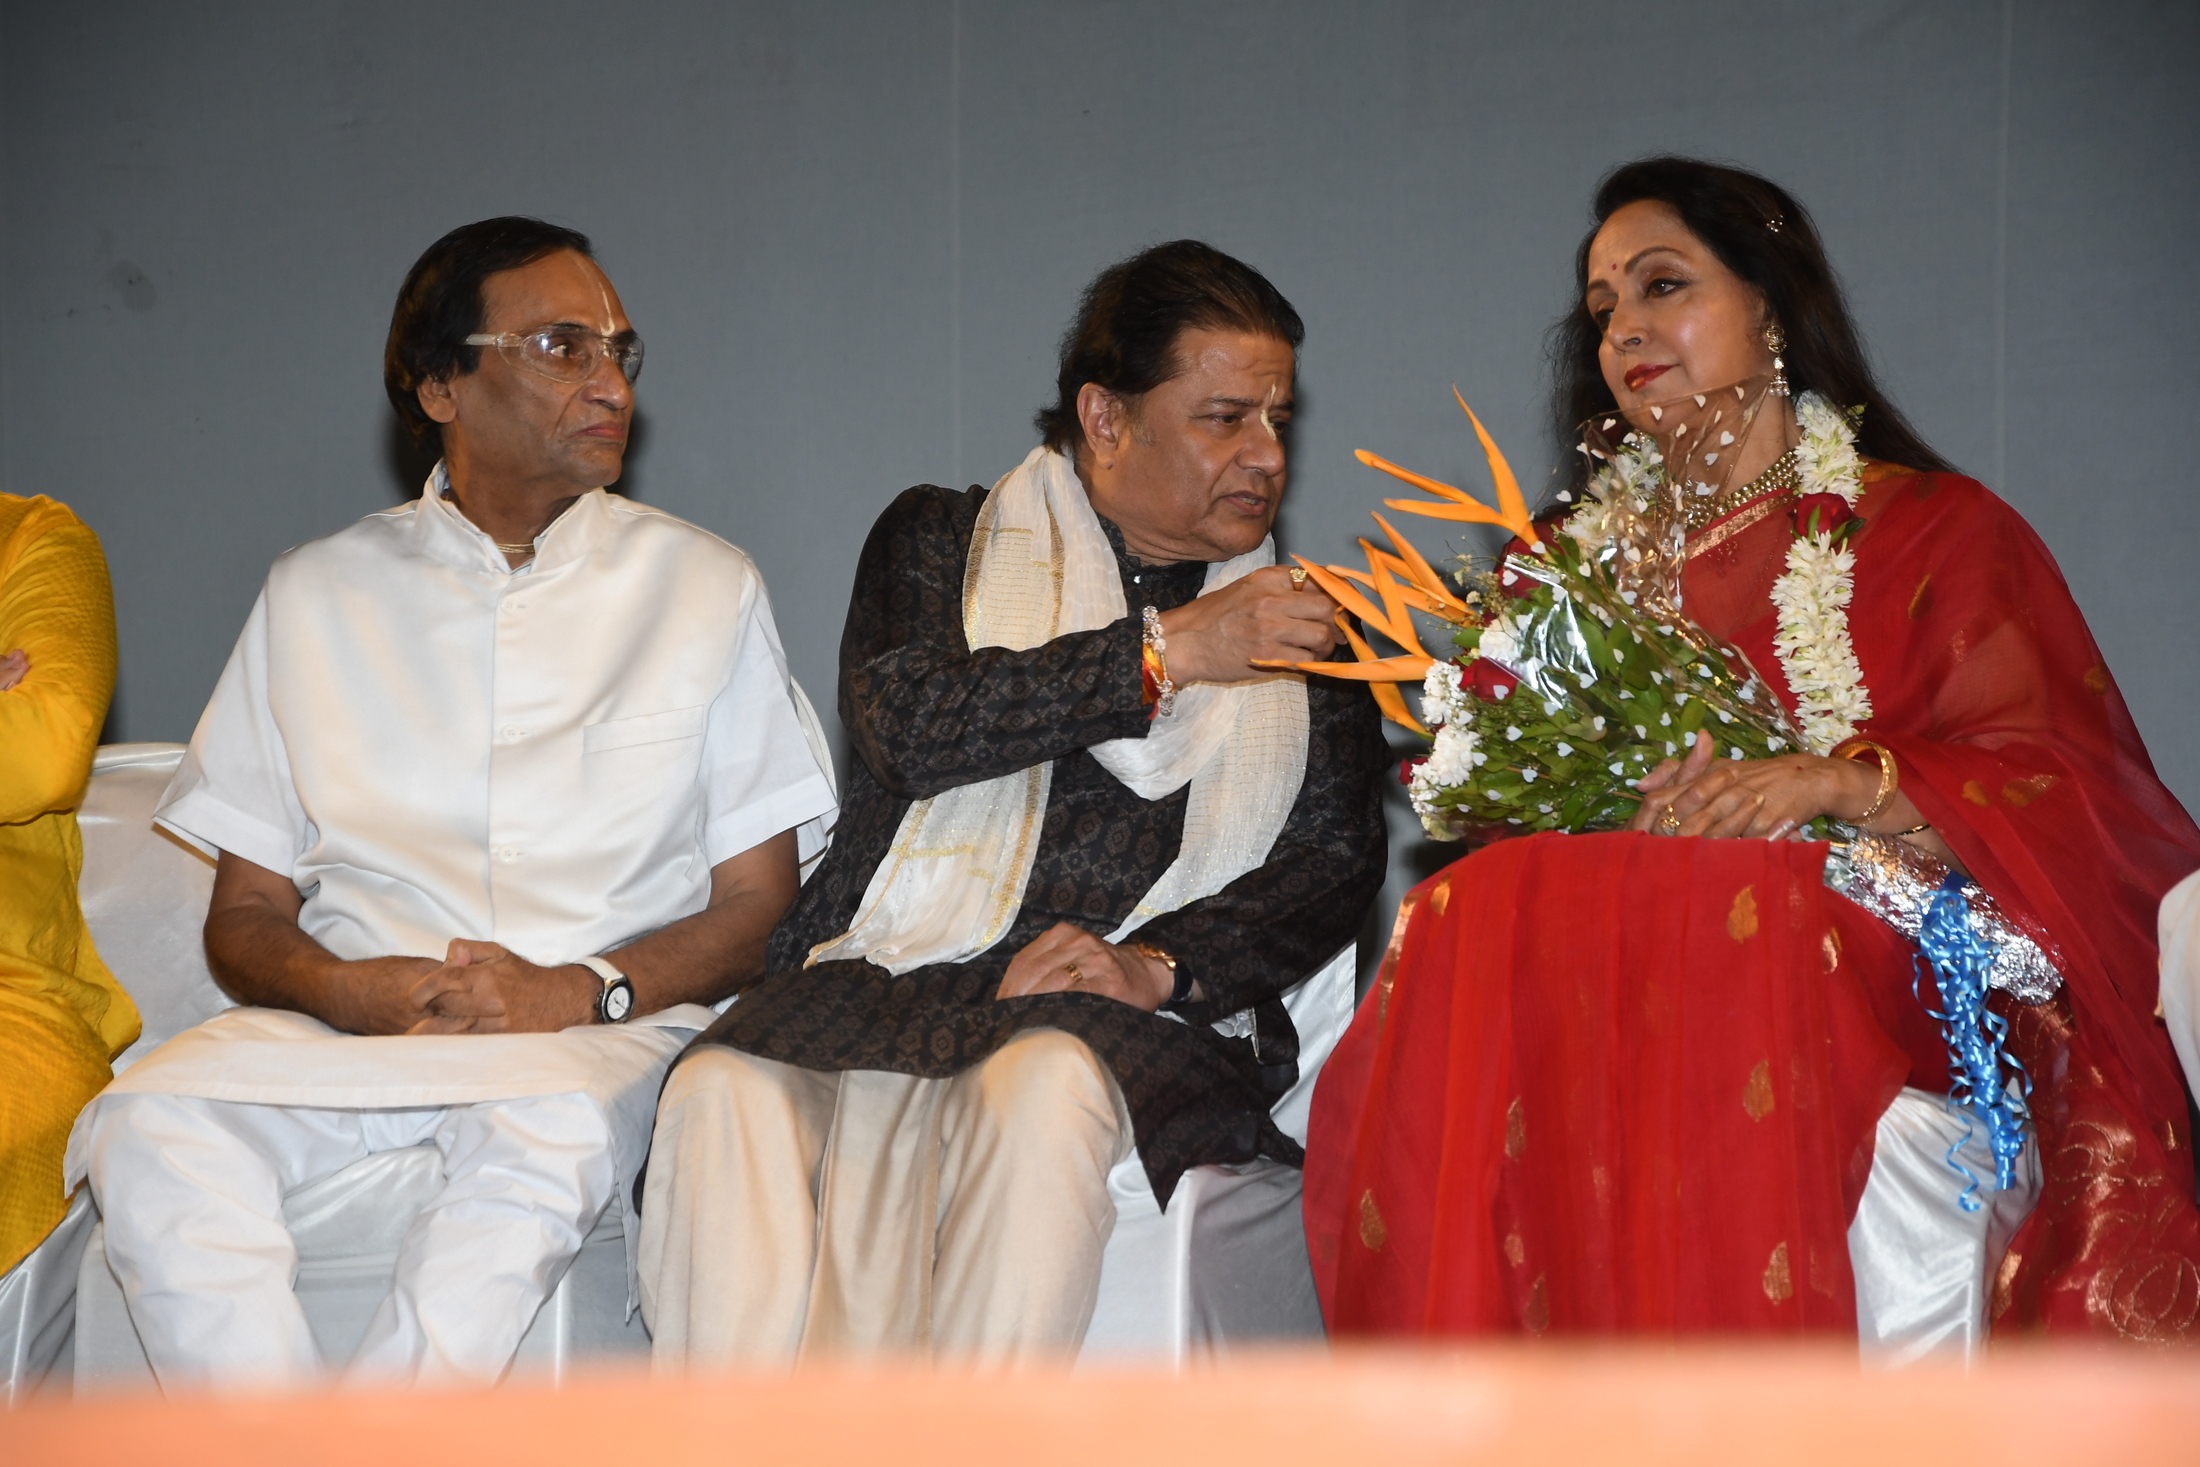 Narayan Agarwal, Anup Jalota and Hema Malini during the album launch -Photo By Sachin Murdeshwar GPN 